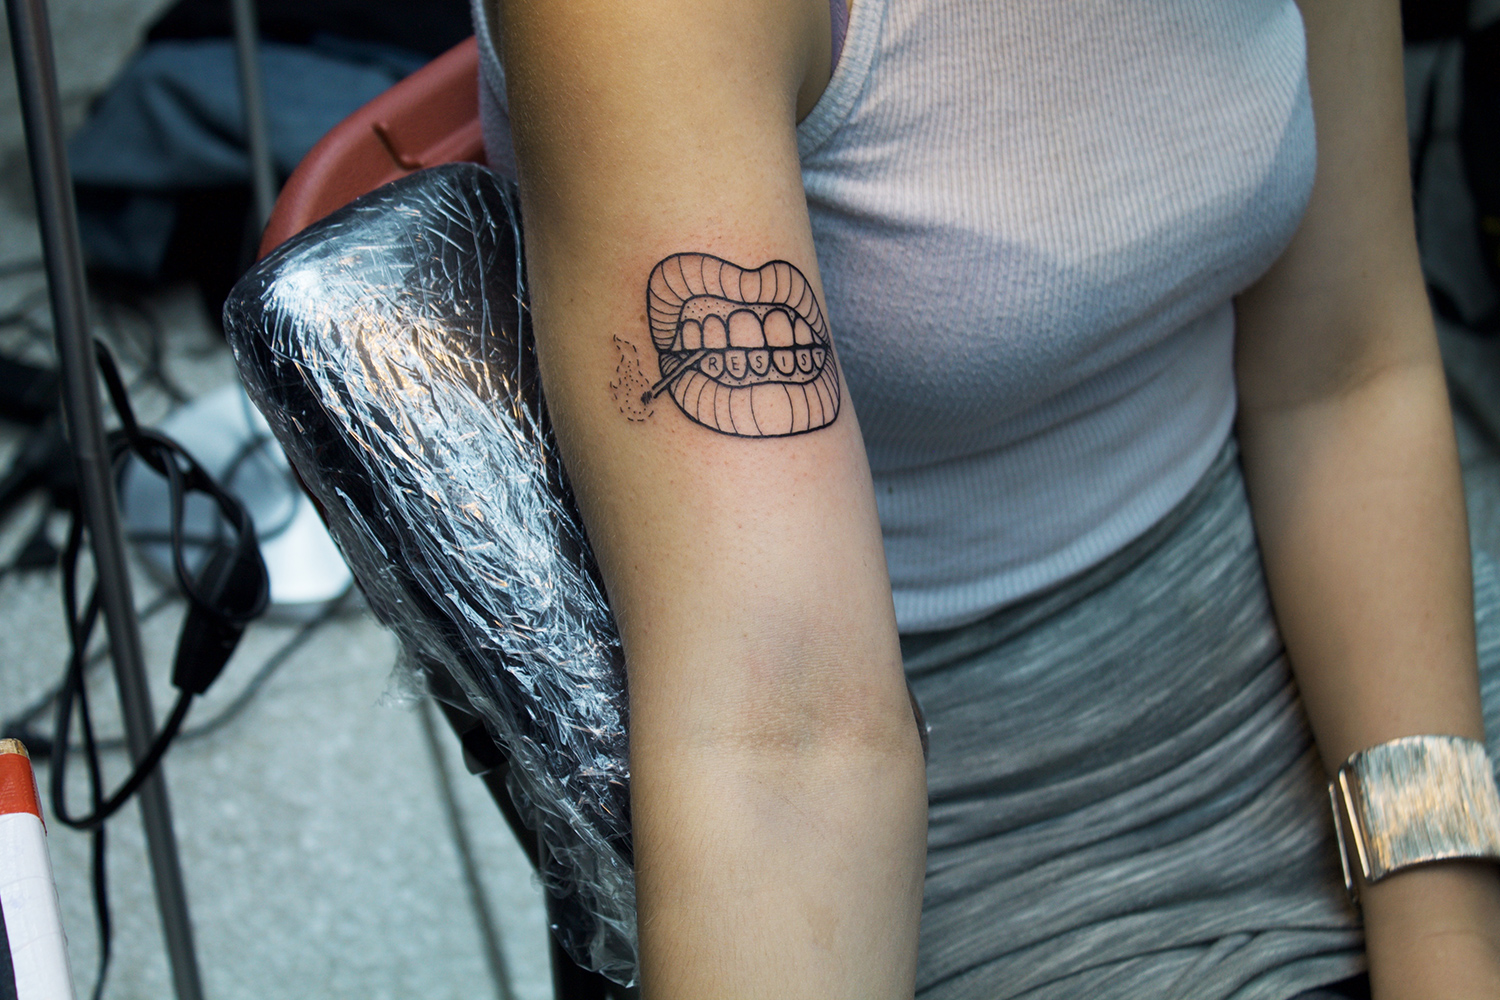 Art Tattoo Montreal Show - Emily Malice, mouth tattoo